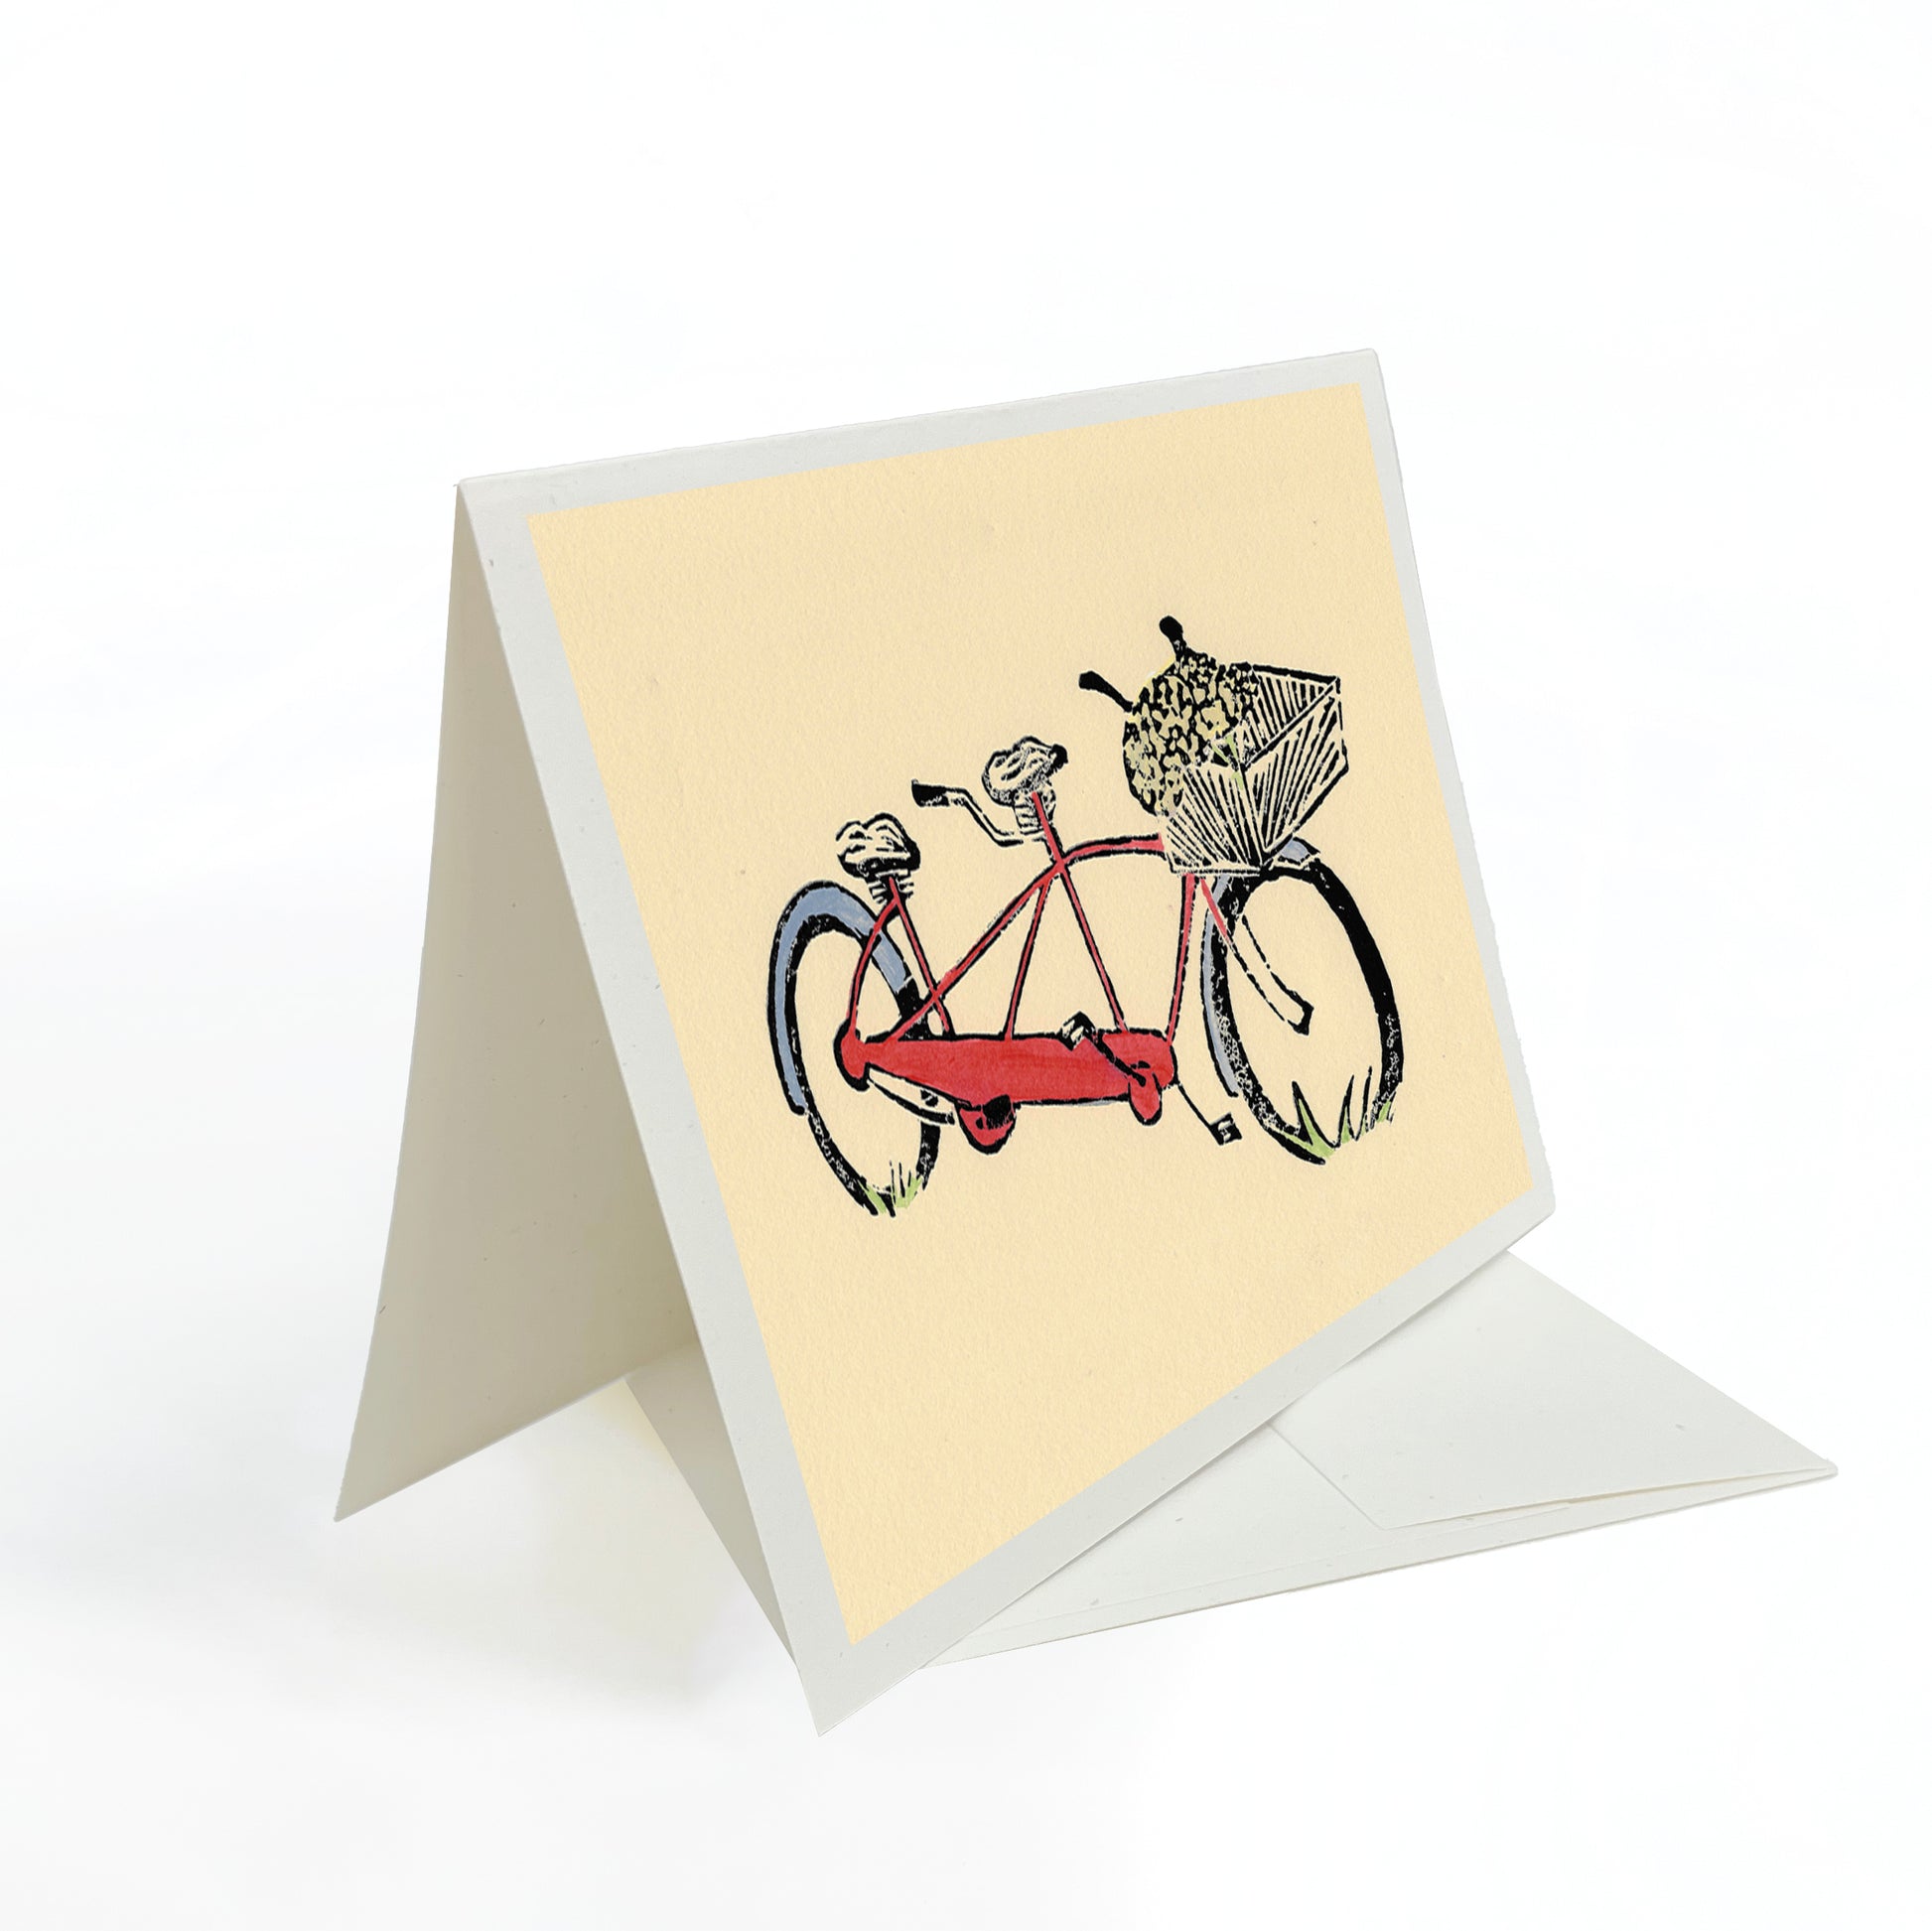 Red Tandem bike greeting card by Natalia Wohletz of Peninsula Prints.